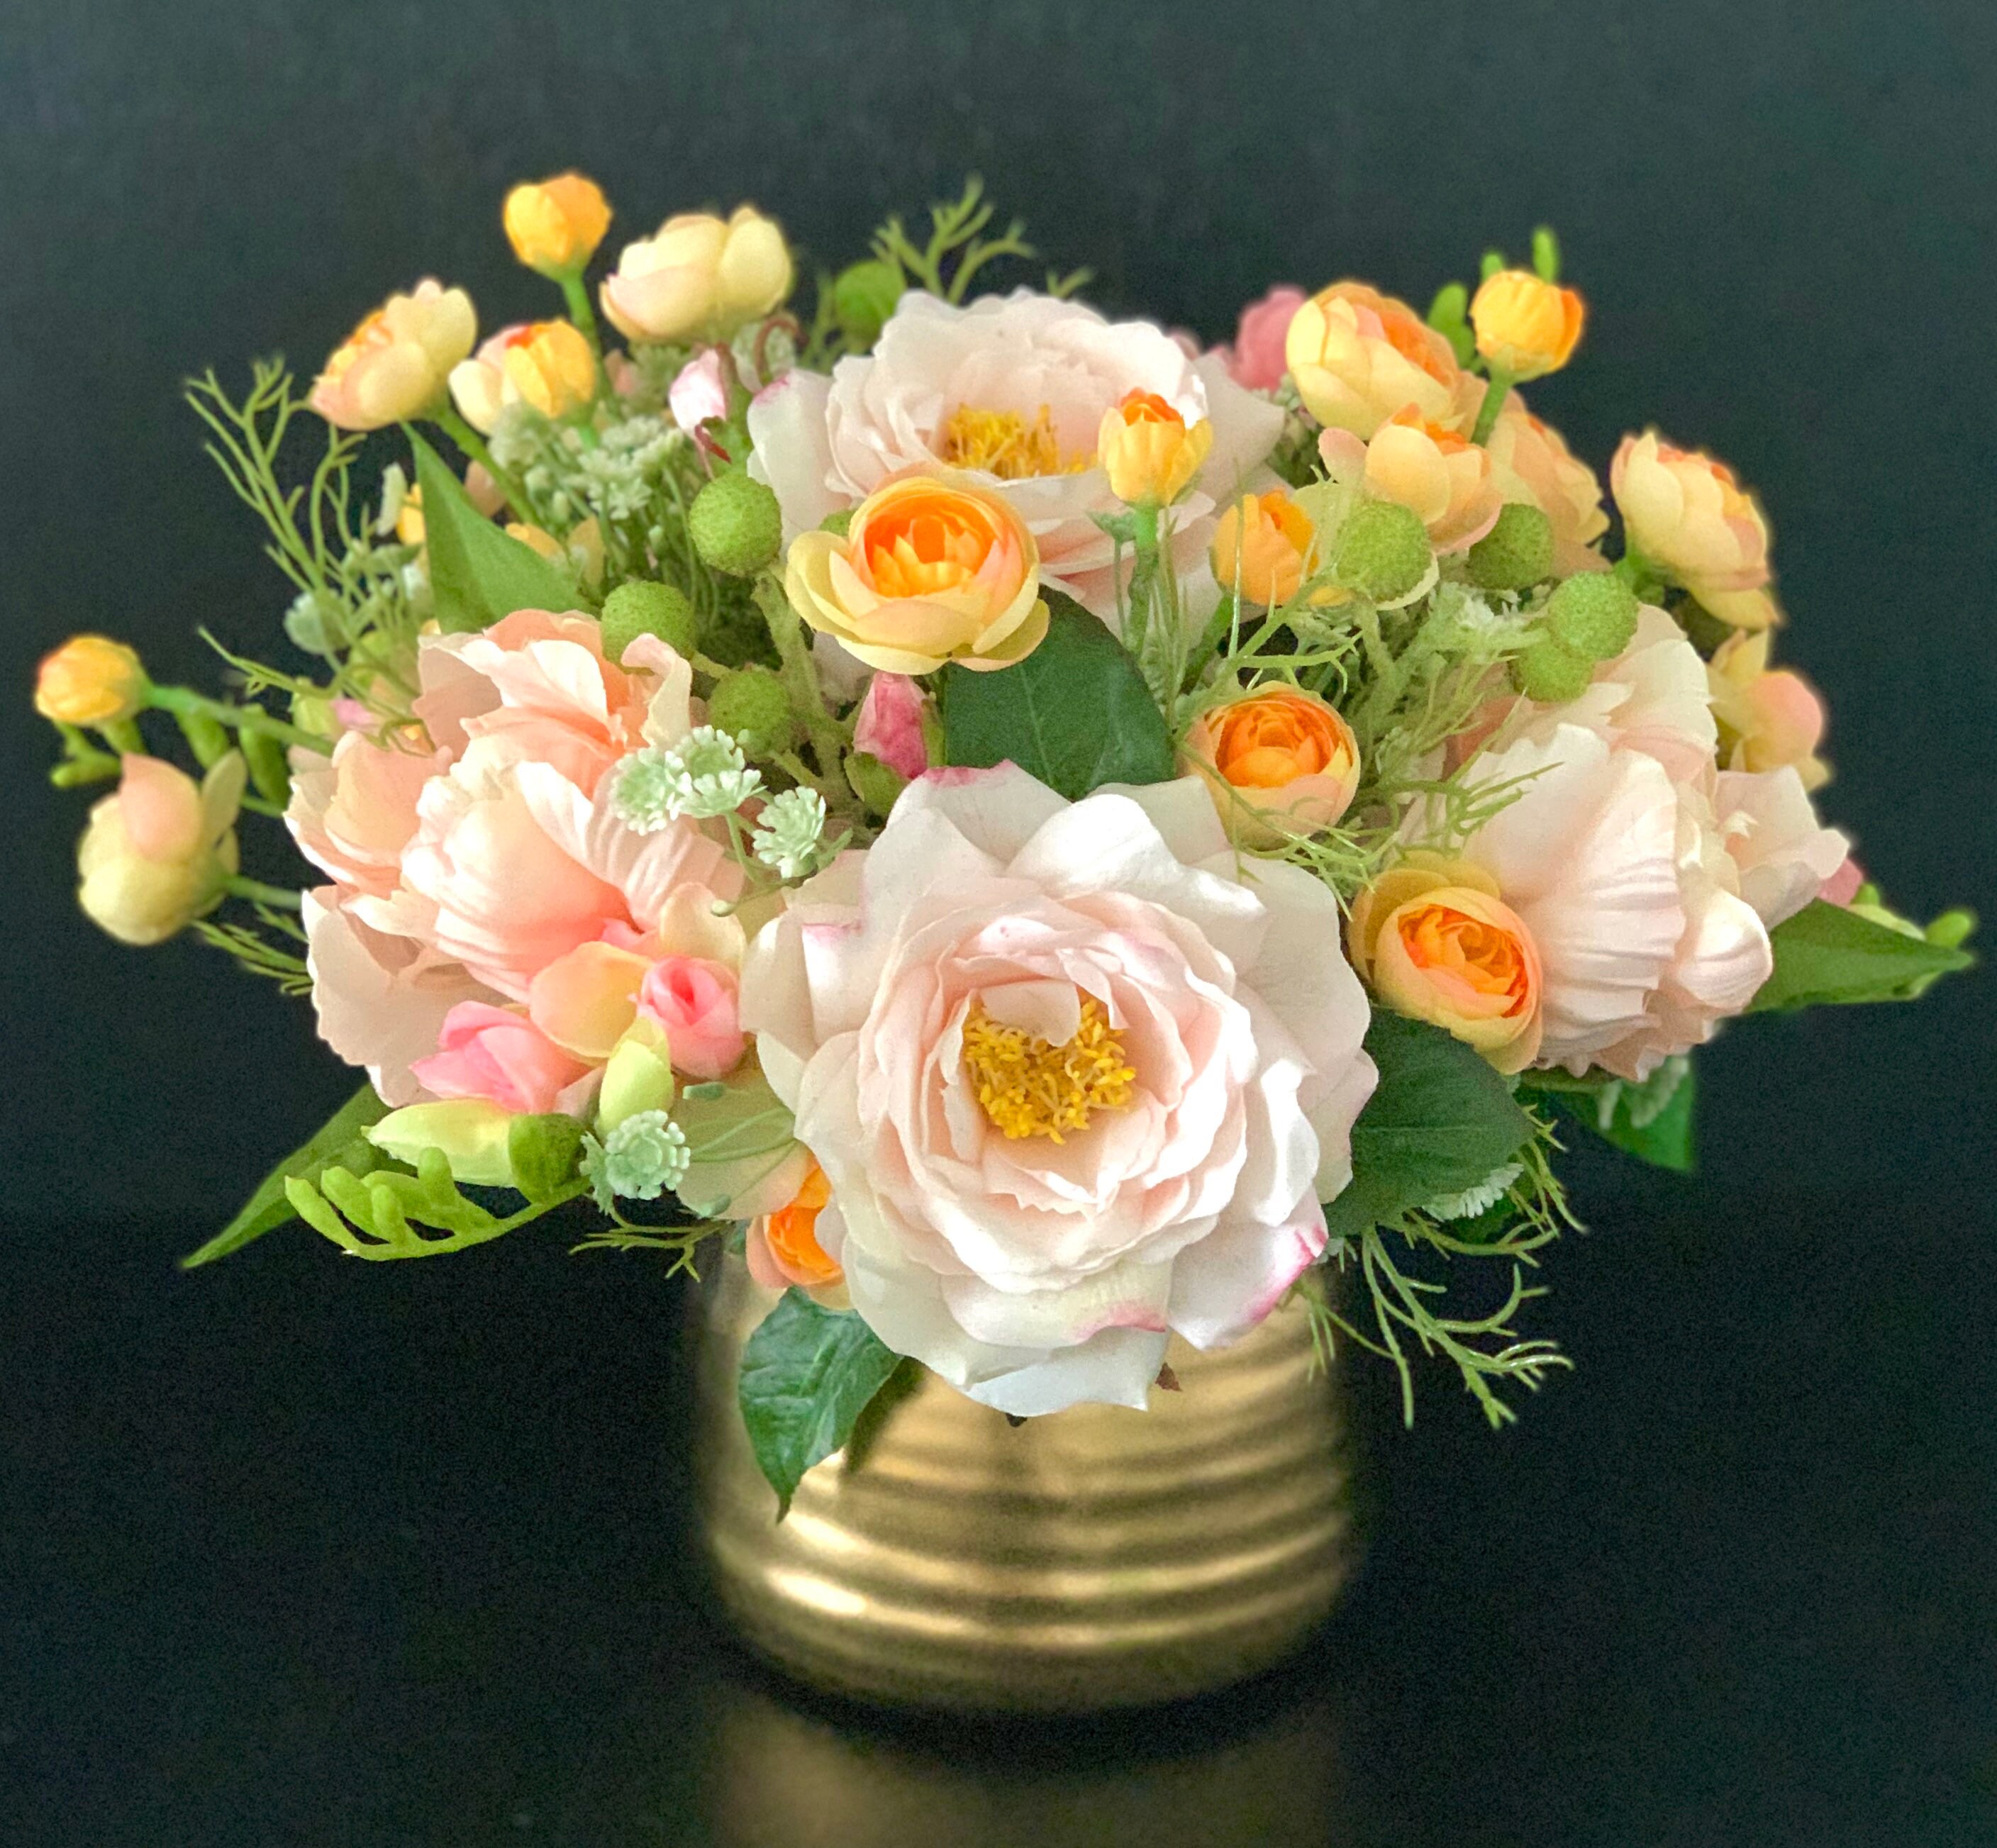 12 Dark Yellow Open Roses, Gold Artificial Flowers, 4 Head, Wedding  Arrangement, Bridal Bouquet, Centerpiece, Fake Plant, Faux Silk Wreath 